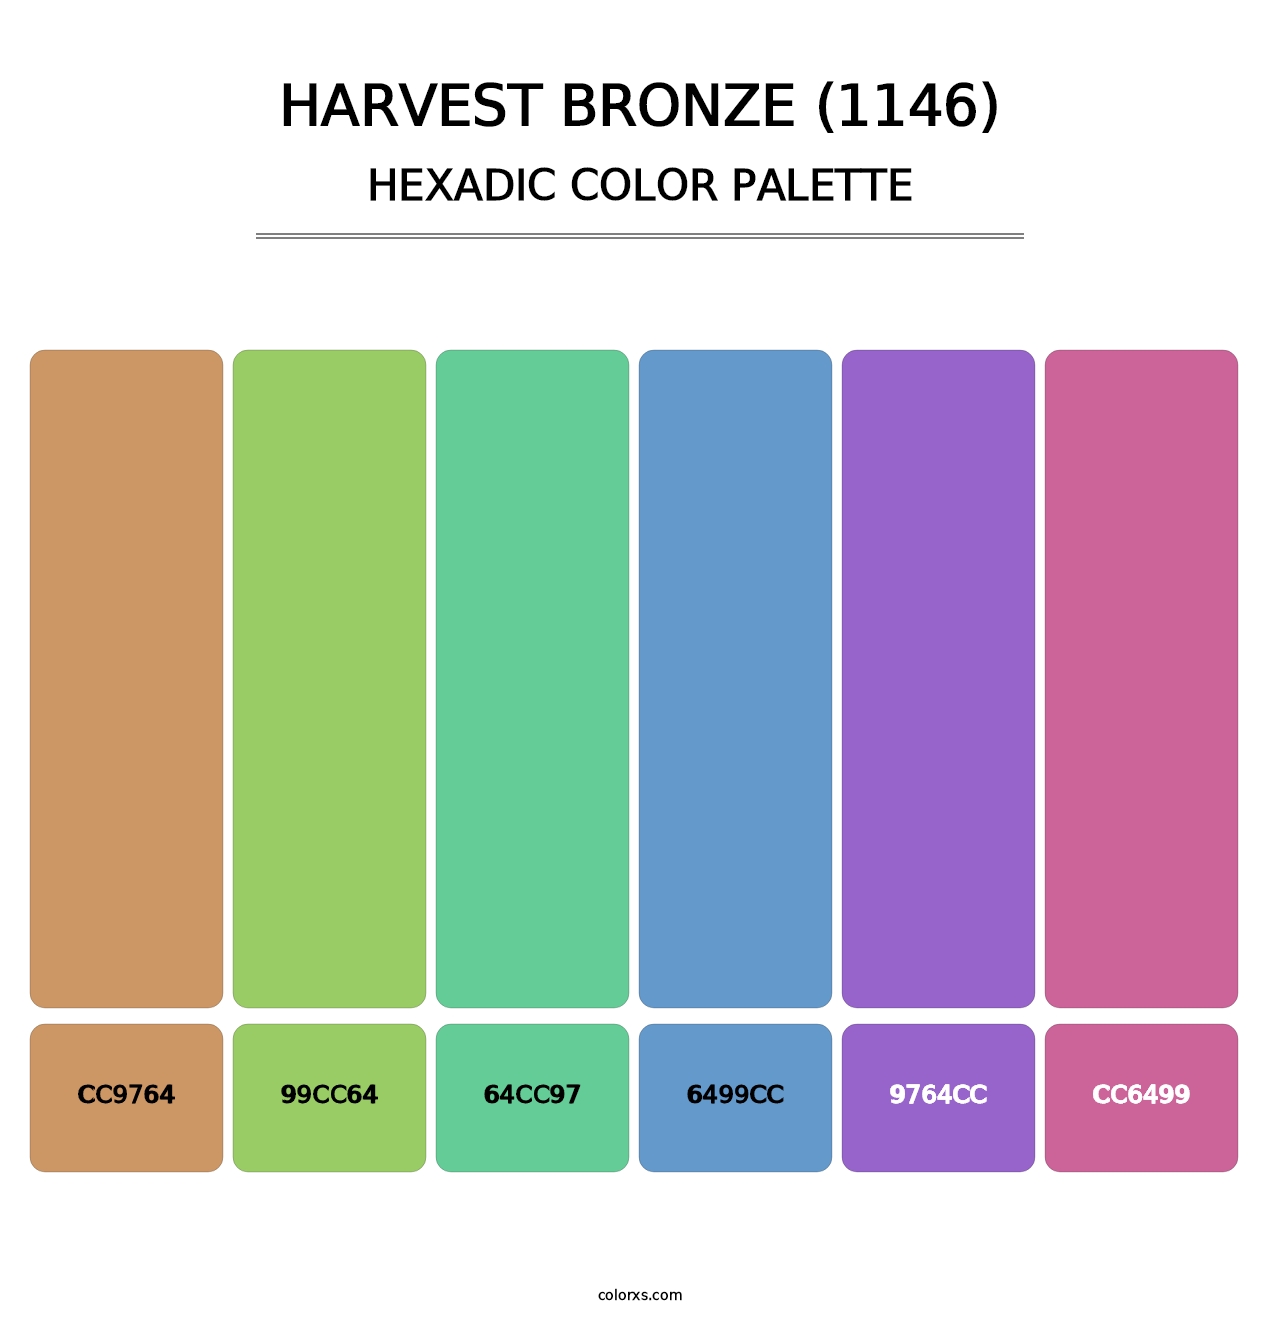 Harvest Bronze (1146) - Hexadic Color Palette